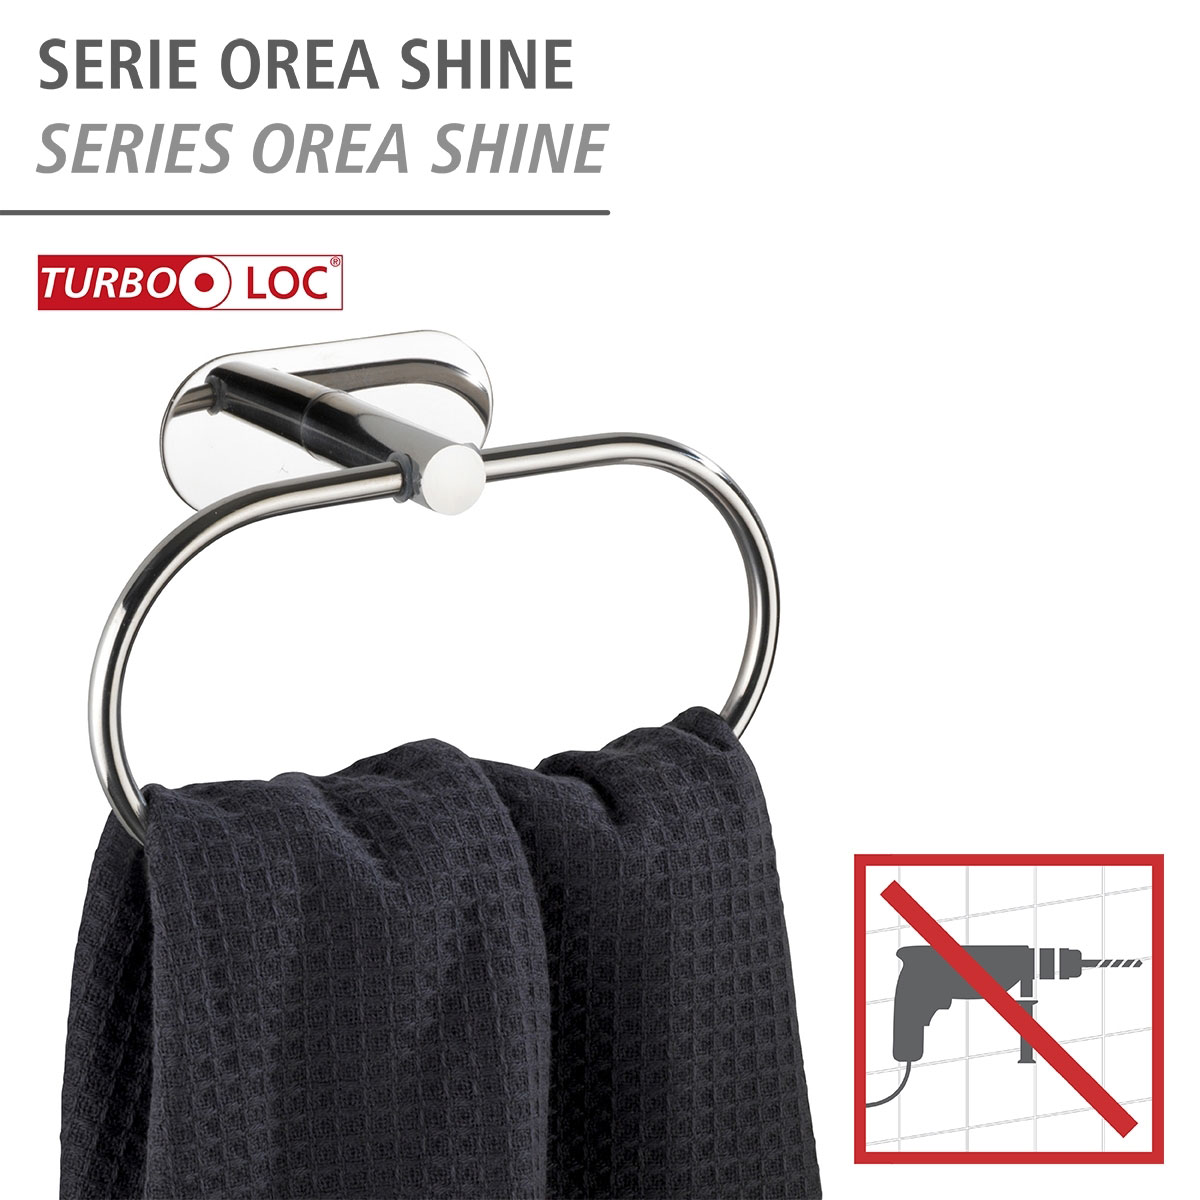 Turbo-Loc Handtuchring 503695 | Orea Wenko Shine